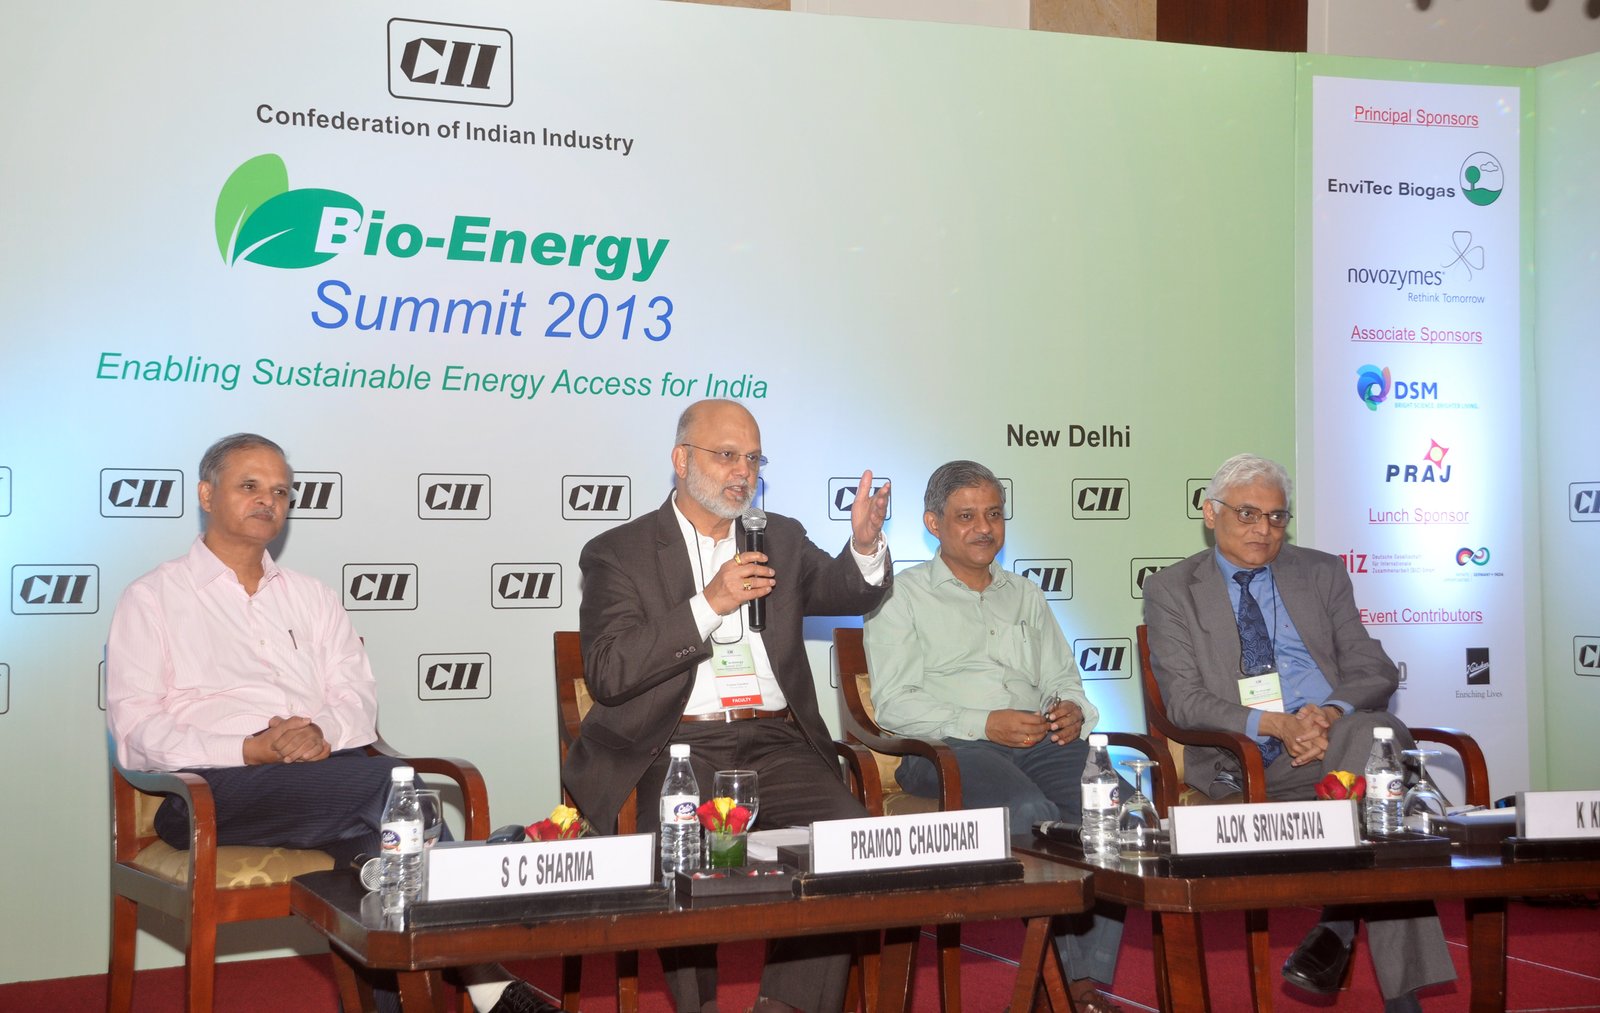 Mr Pramod Chaudhari, chairman, CII National Committee on Bioenergy and executive chairman, Praj Industries speaking at the event.